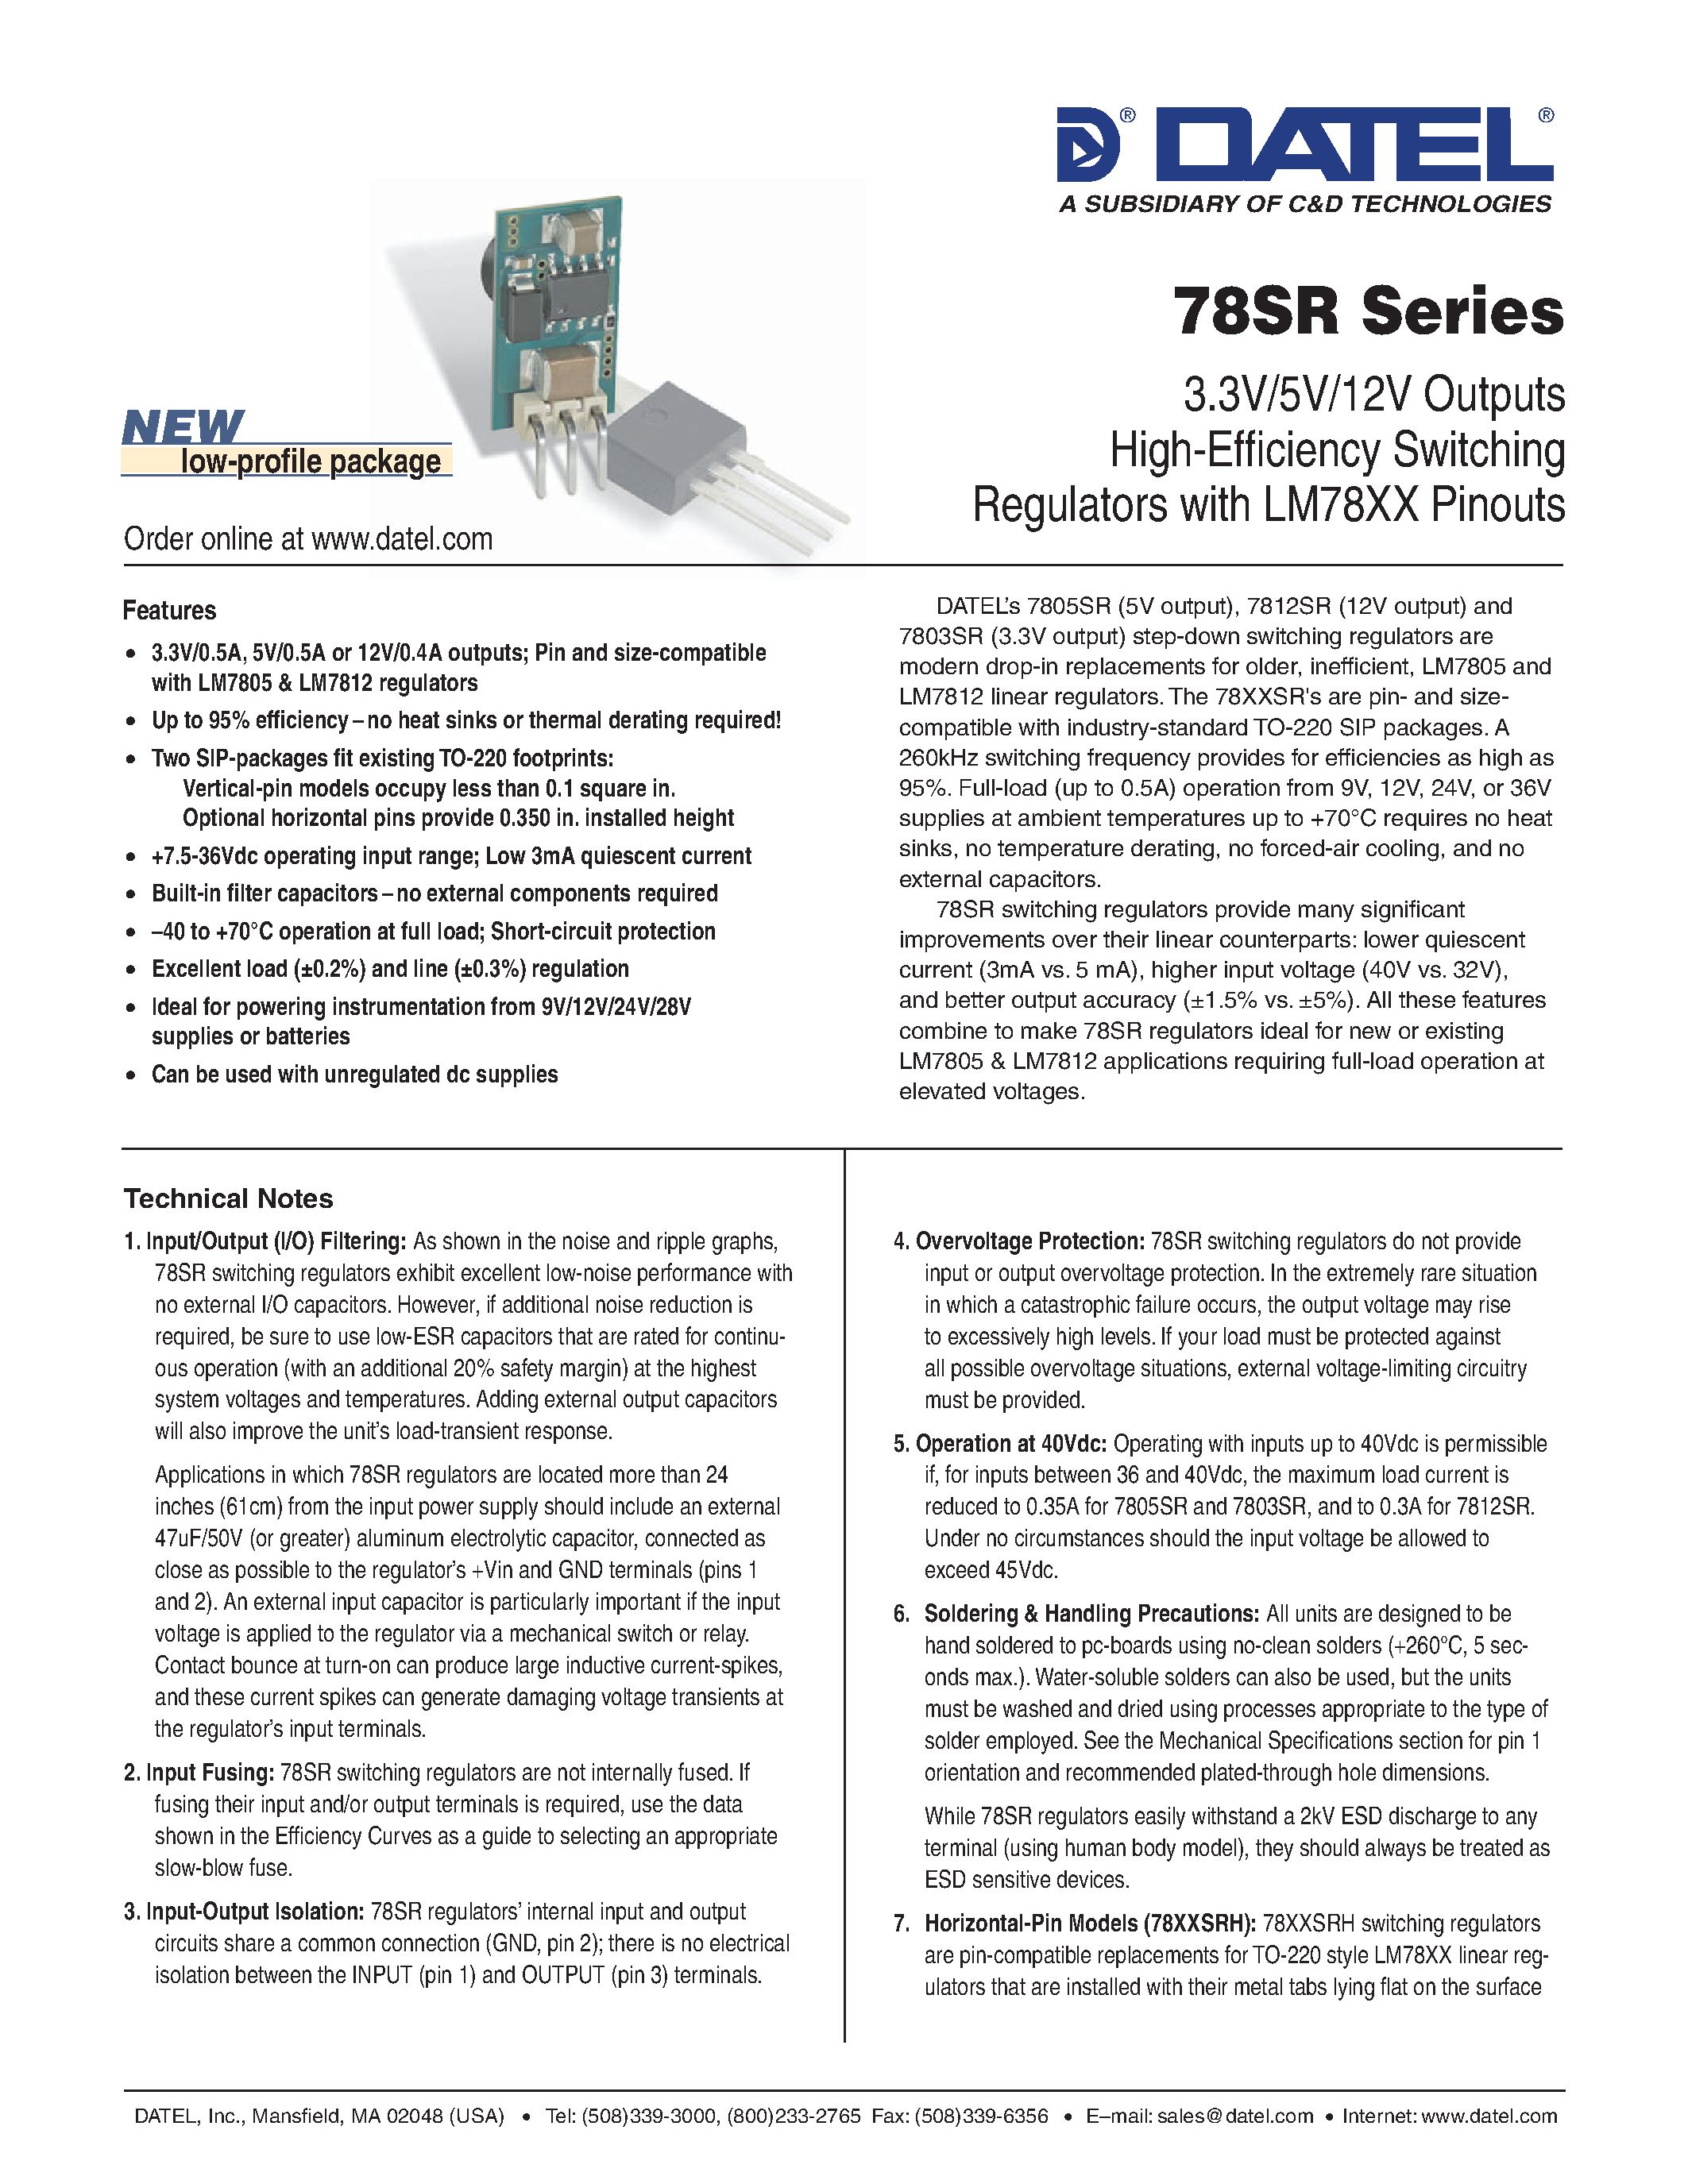 Даташит DMS-78xxSR - 3.3V/5V/12V Outputs High-Effi ciency Switching Regulators with LM78XX Pinouts страница 1